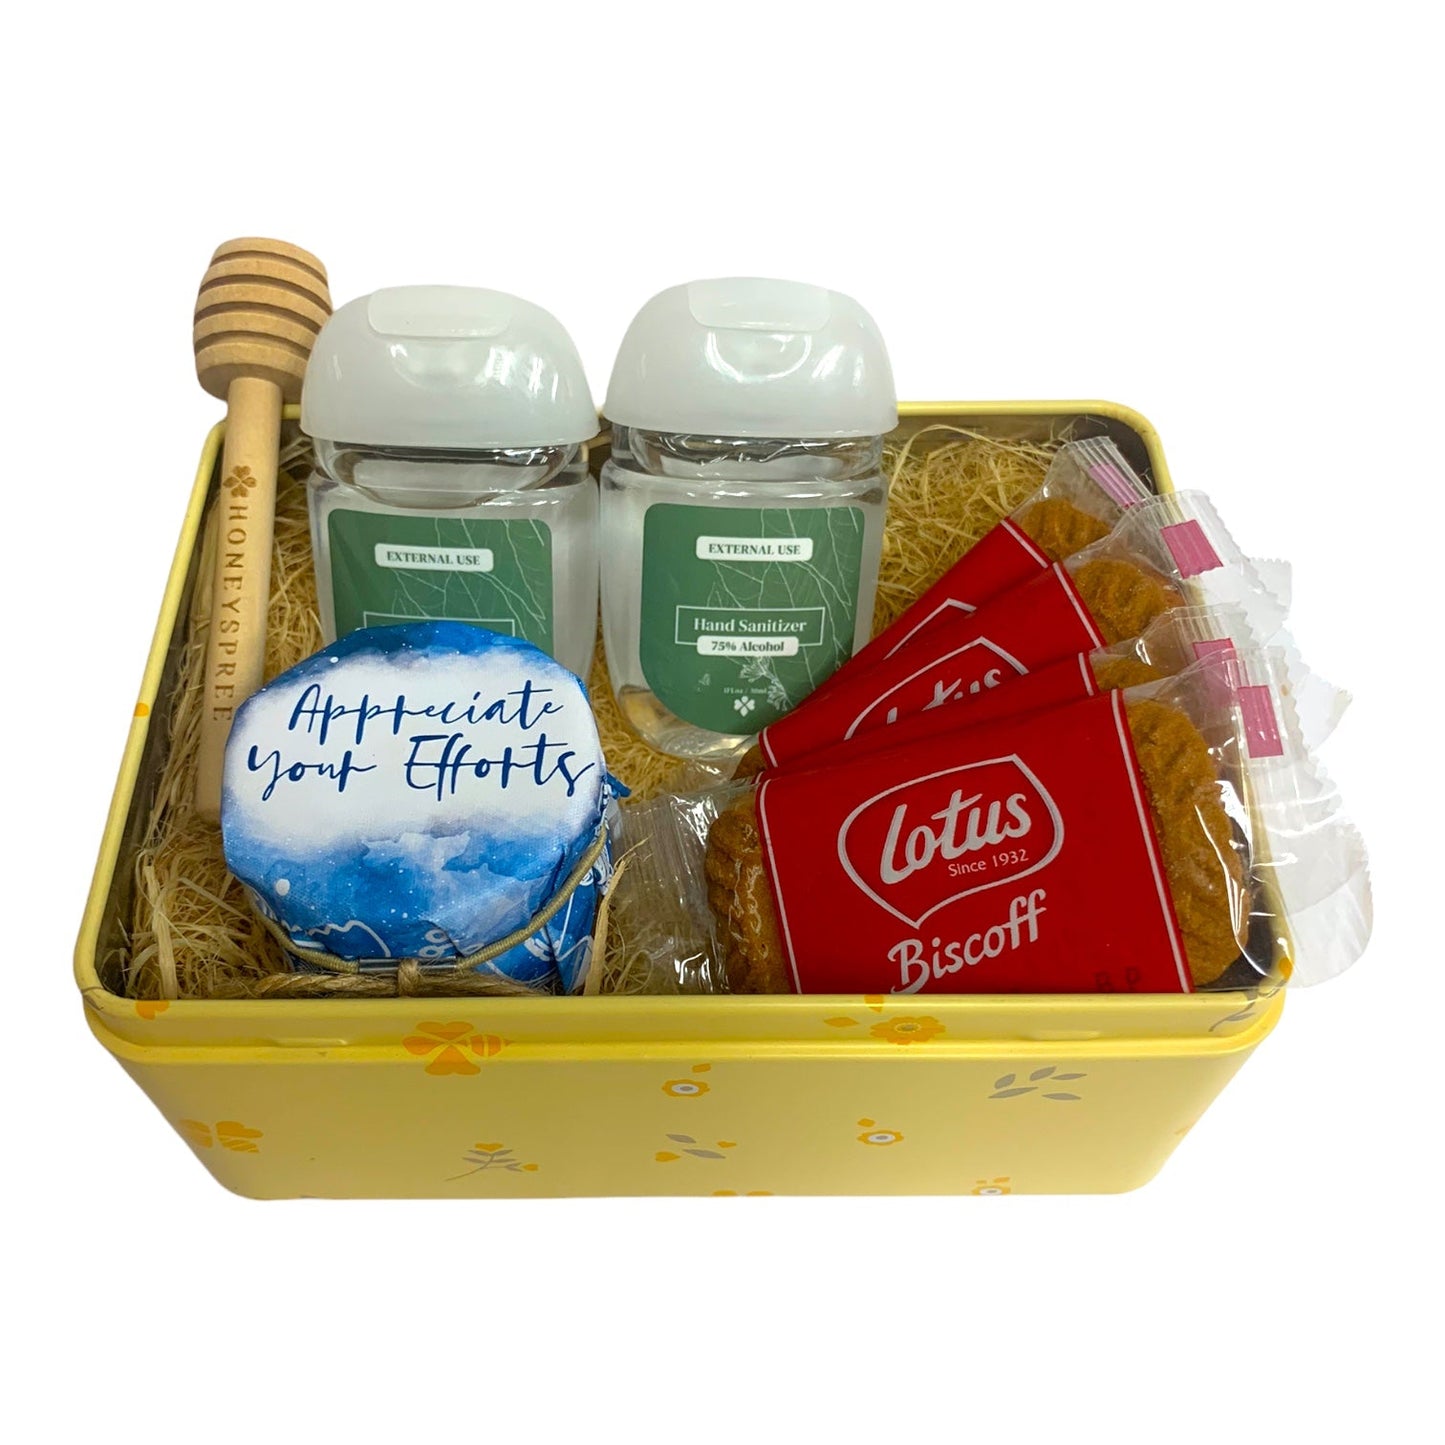 Mini Honey Gifts - Show Your Appreciation